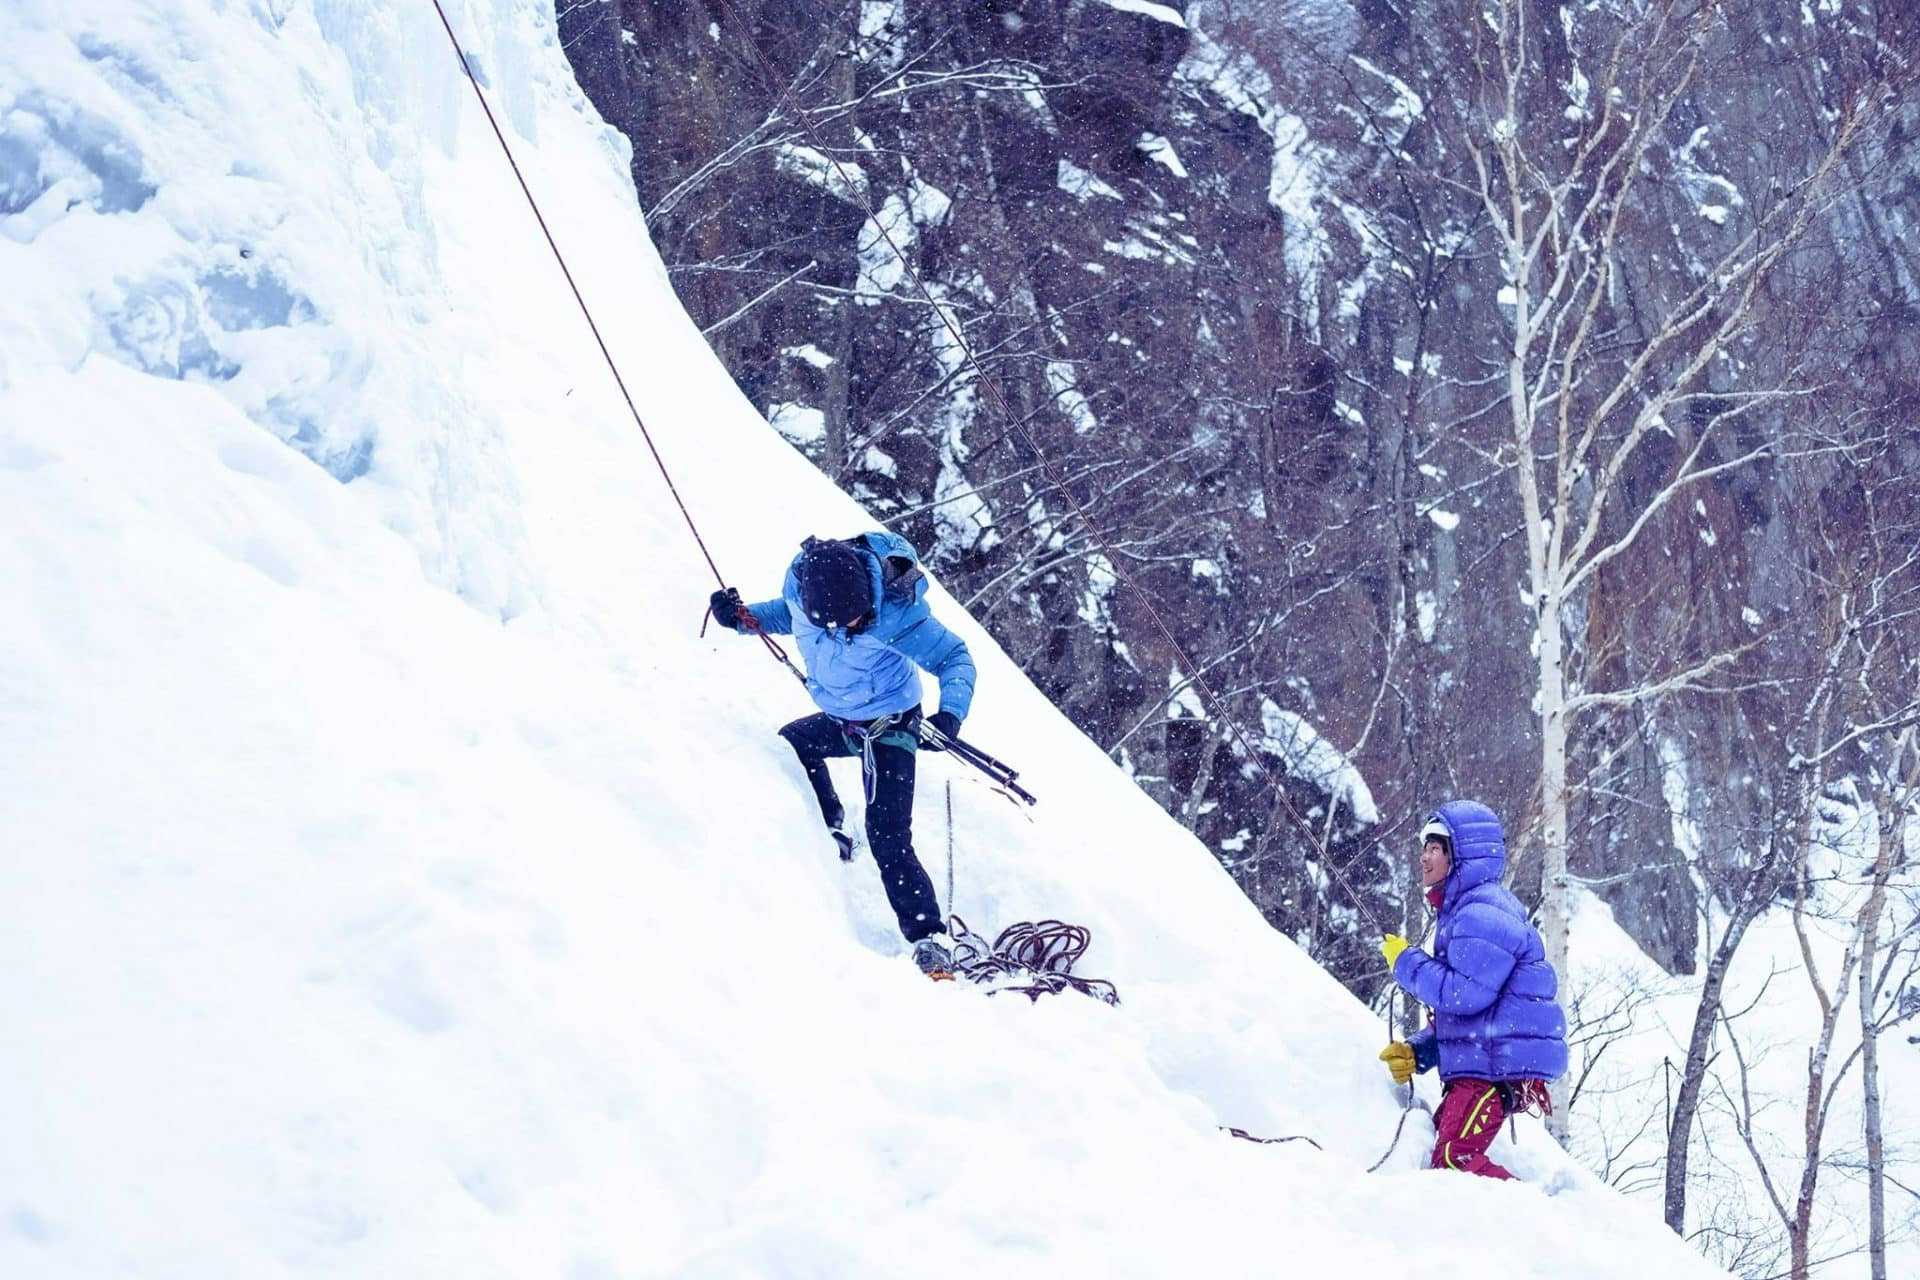 Ice climbing in Japan: winter adventures beyond powder snow